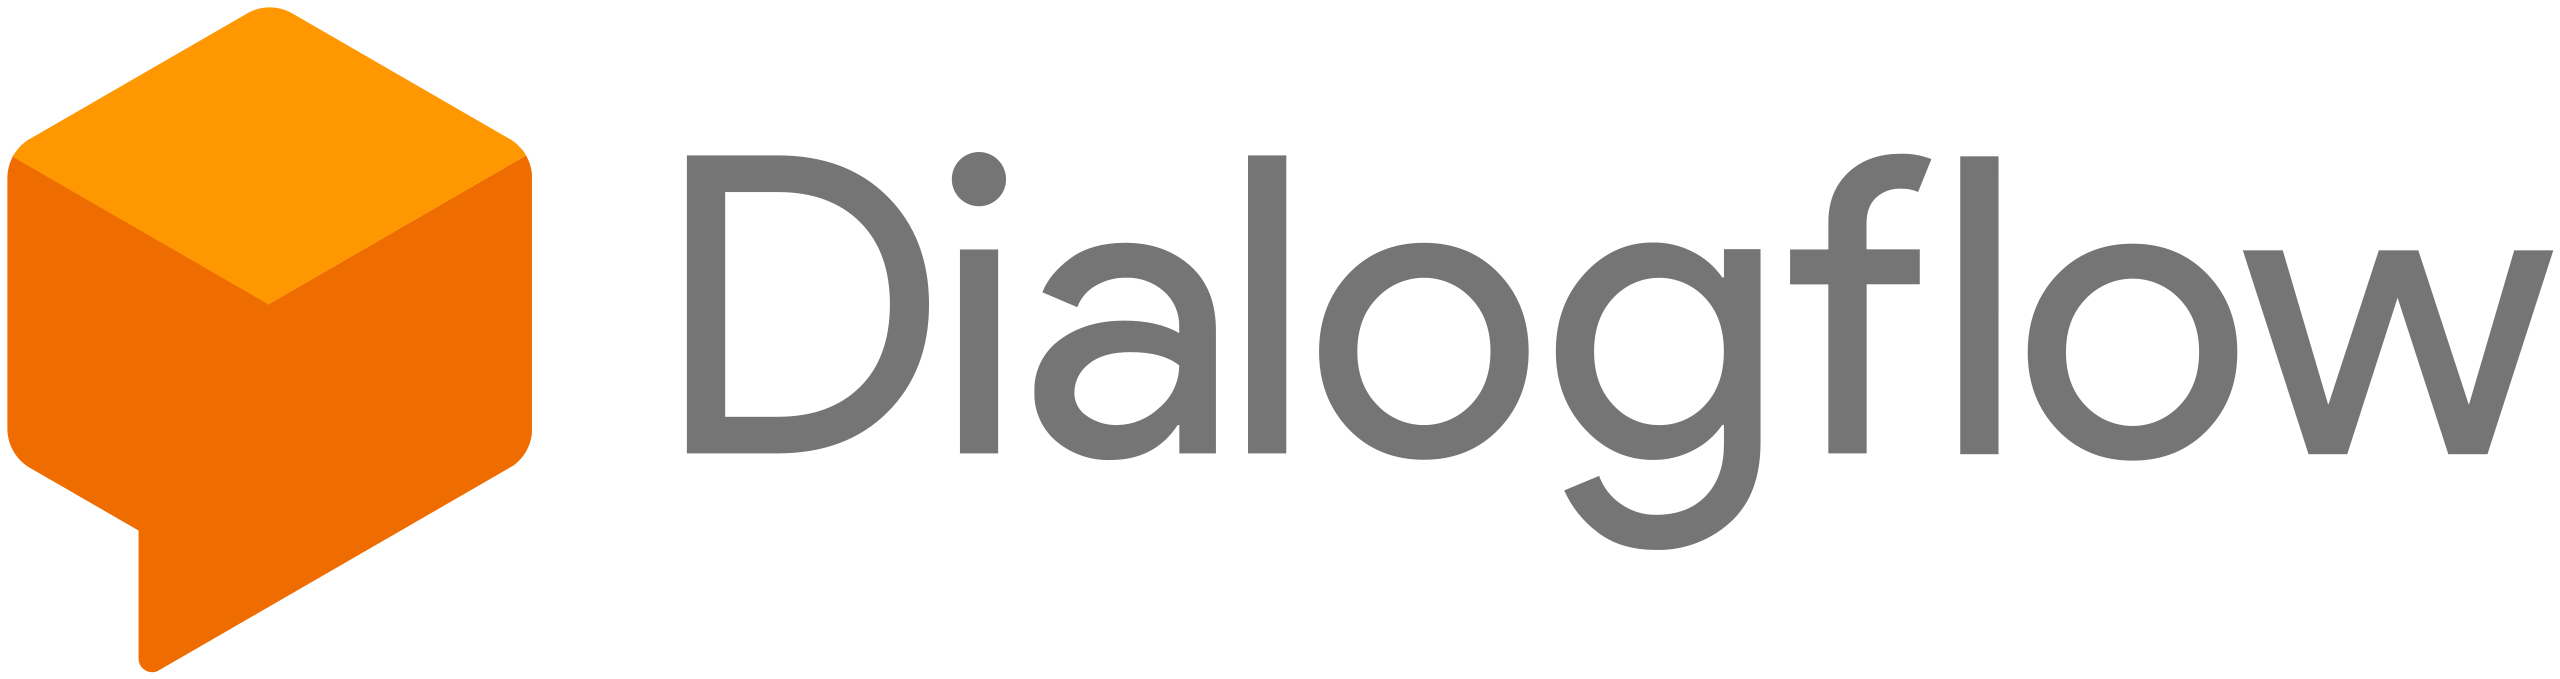 Dialogflow_logo